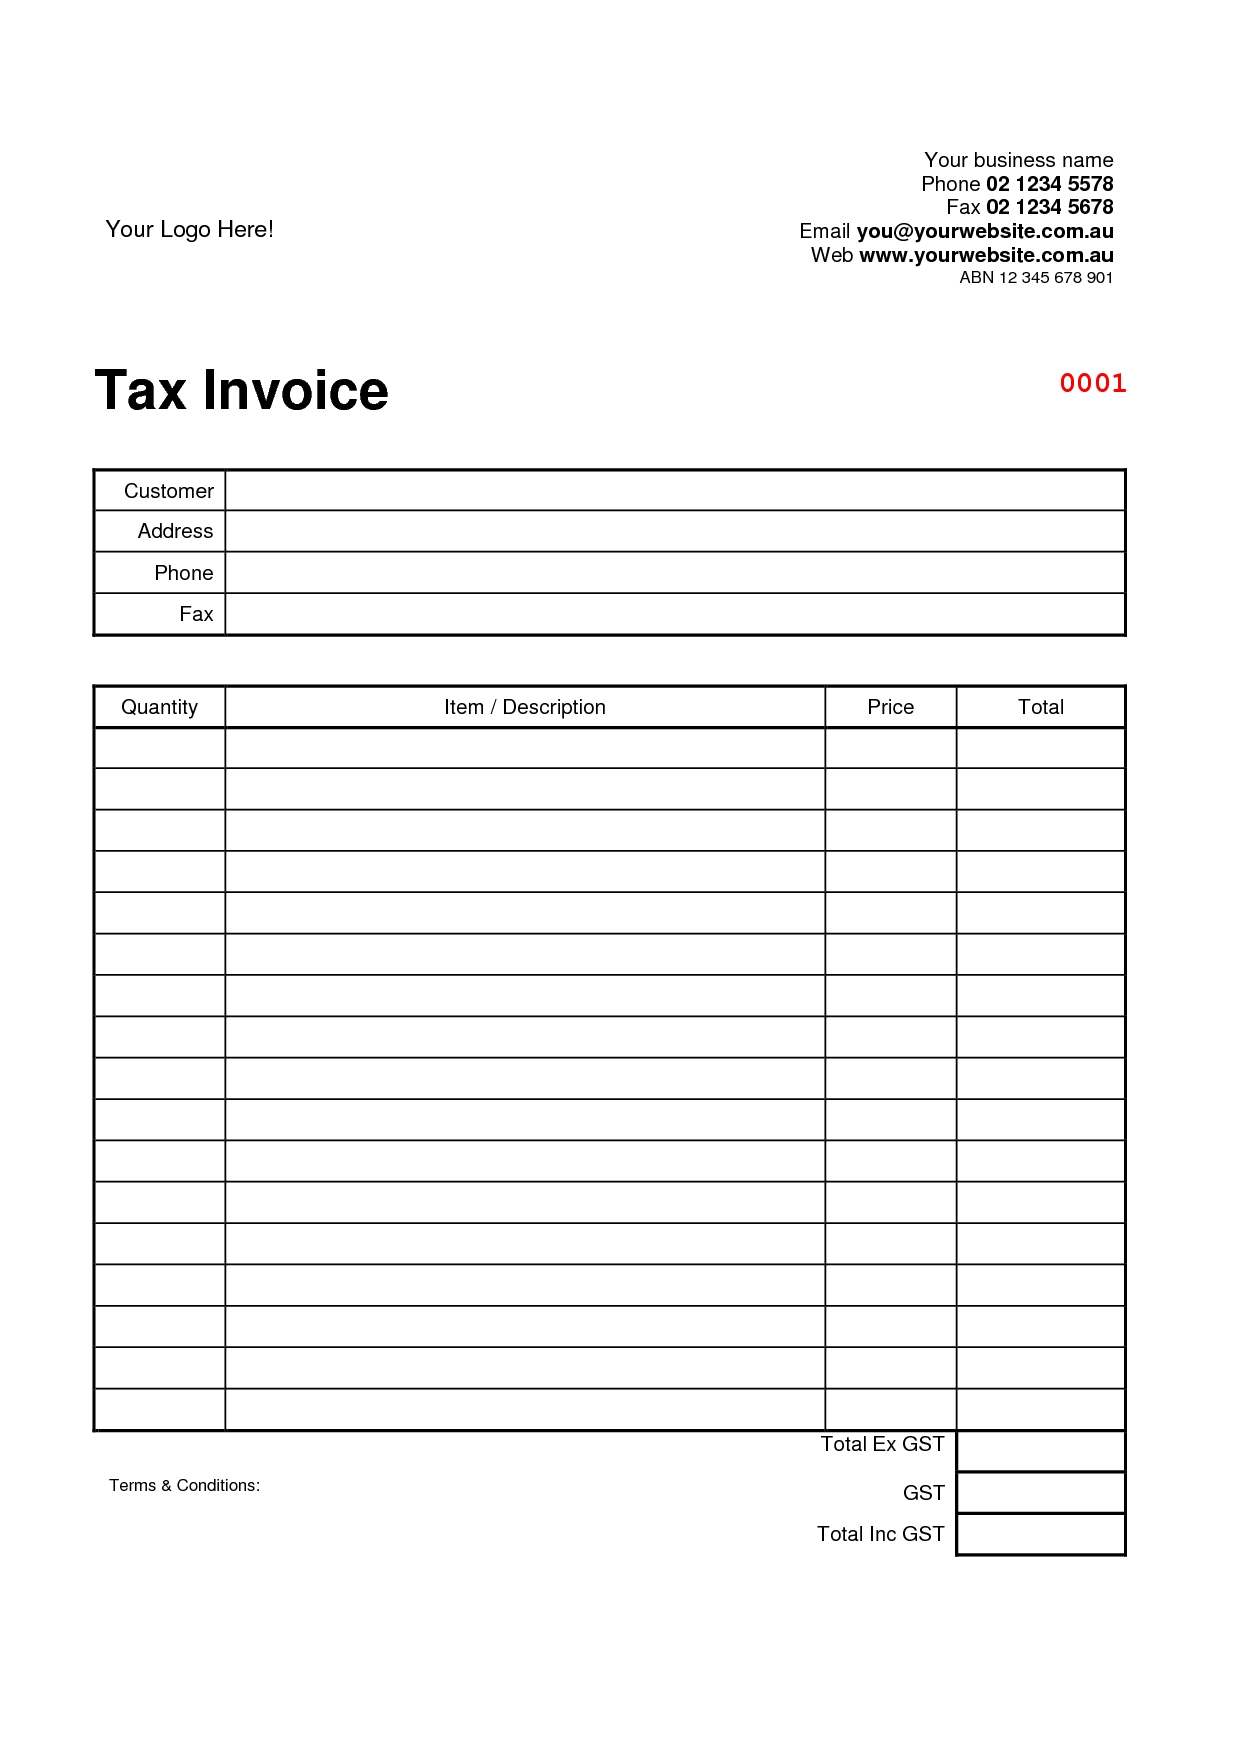 tax invoice template word australia firmsinja tax invoice template australia word